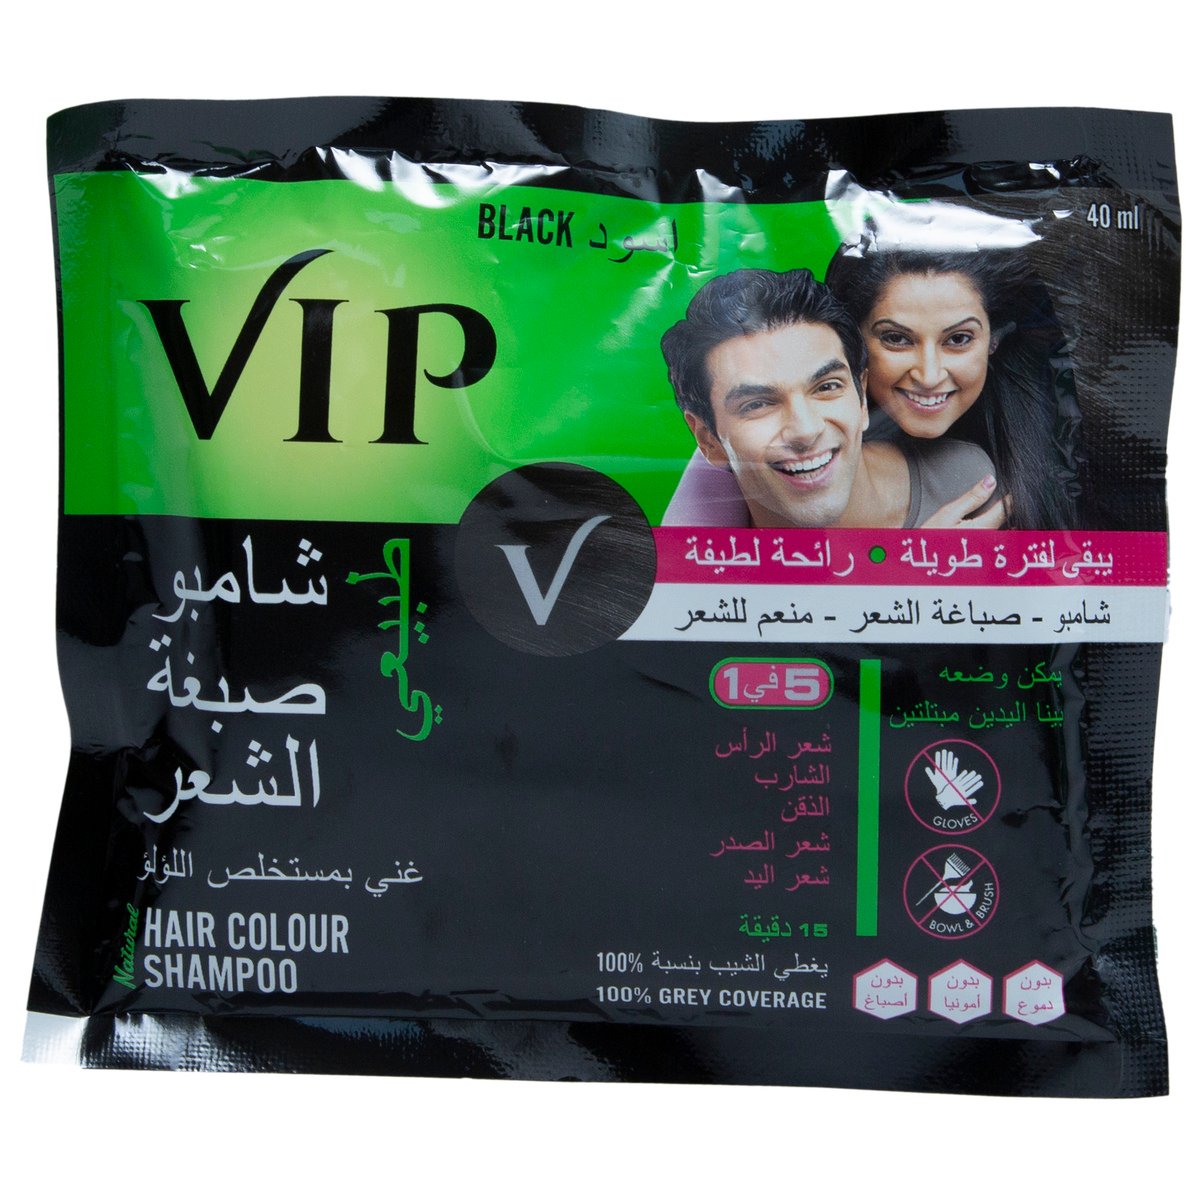 VIP Natural Black Hair Color Shampoo 40 ml